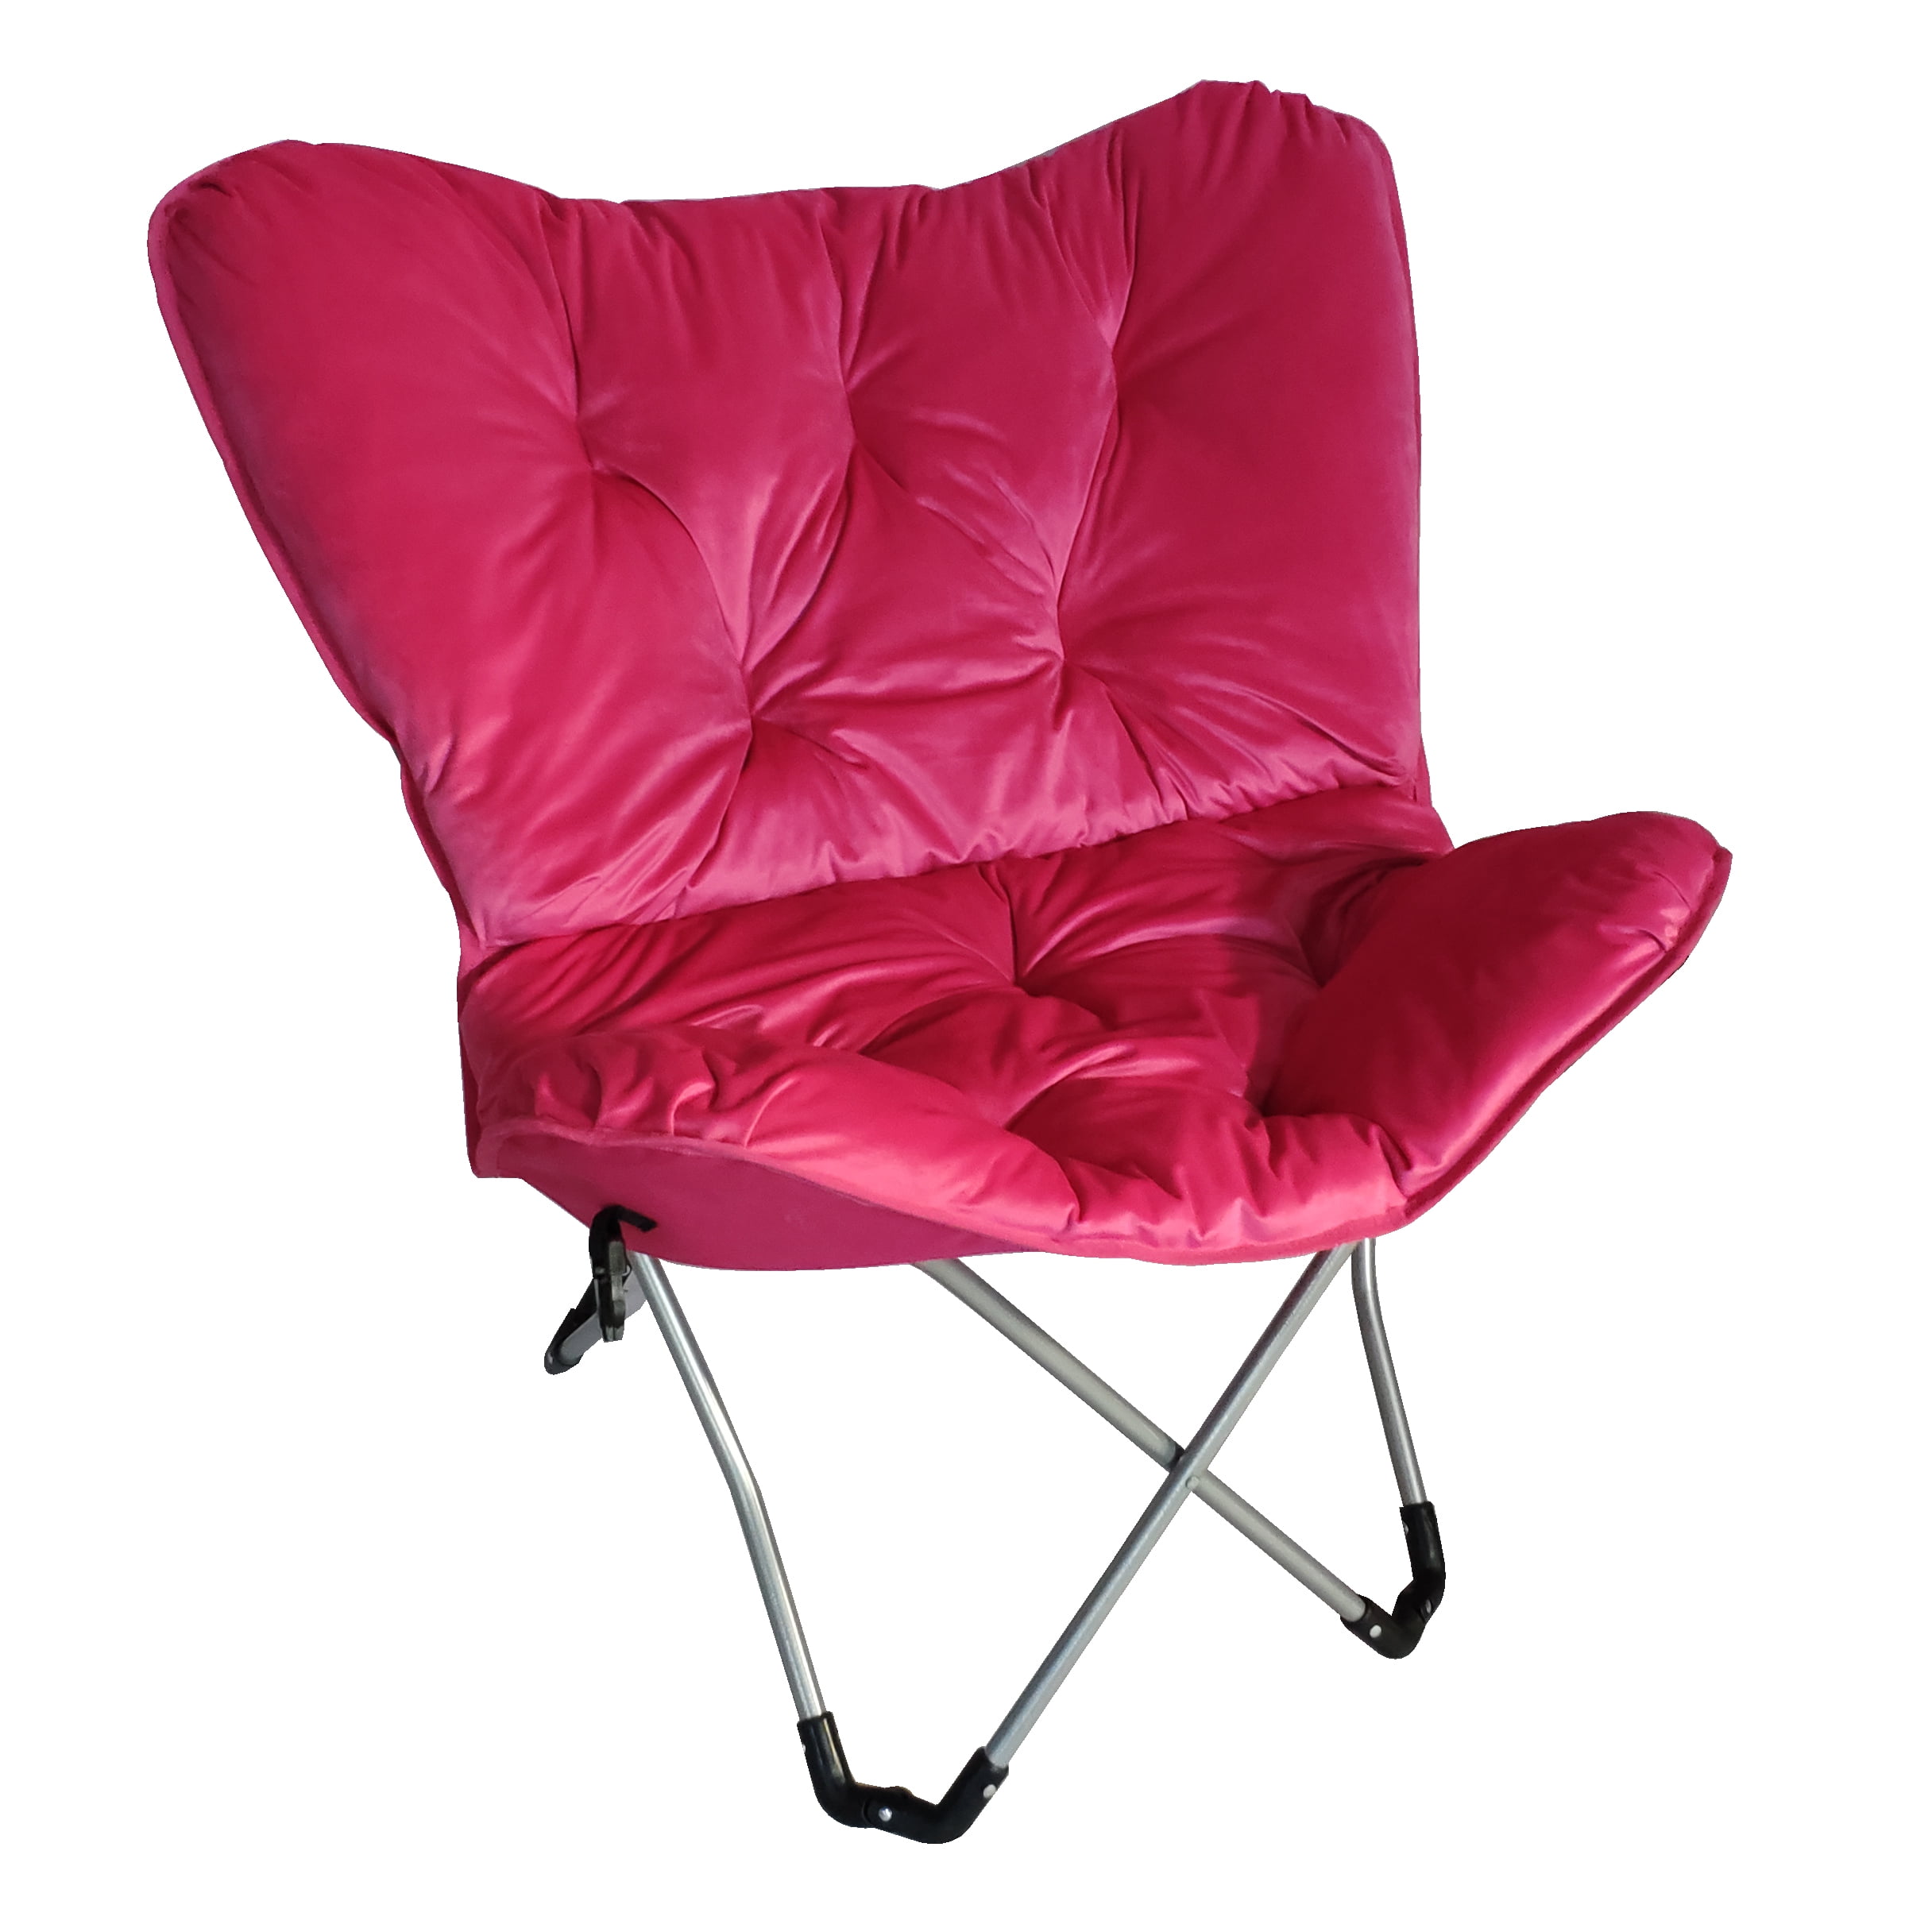 Zenithen Butterfly Chair With High Gloss Silver Frame In Pink Tufted Velvet Fabric Walmart Com Walmart Com